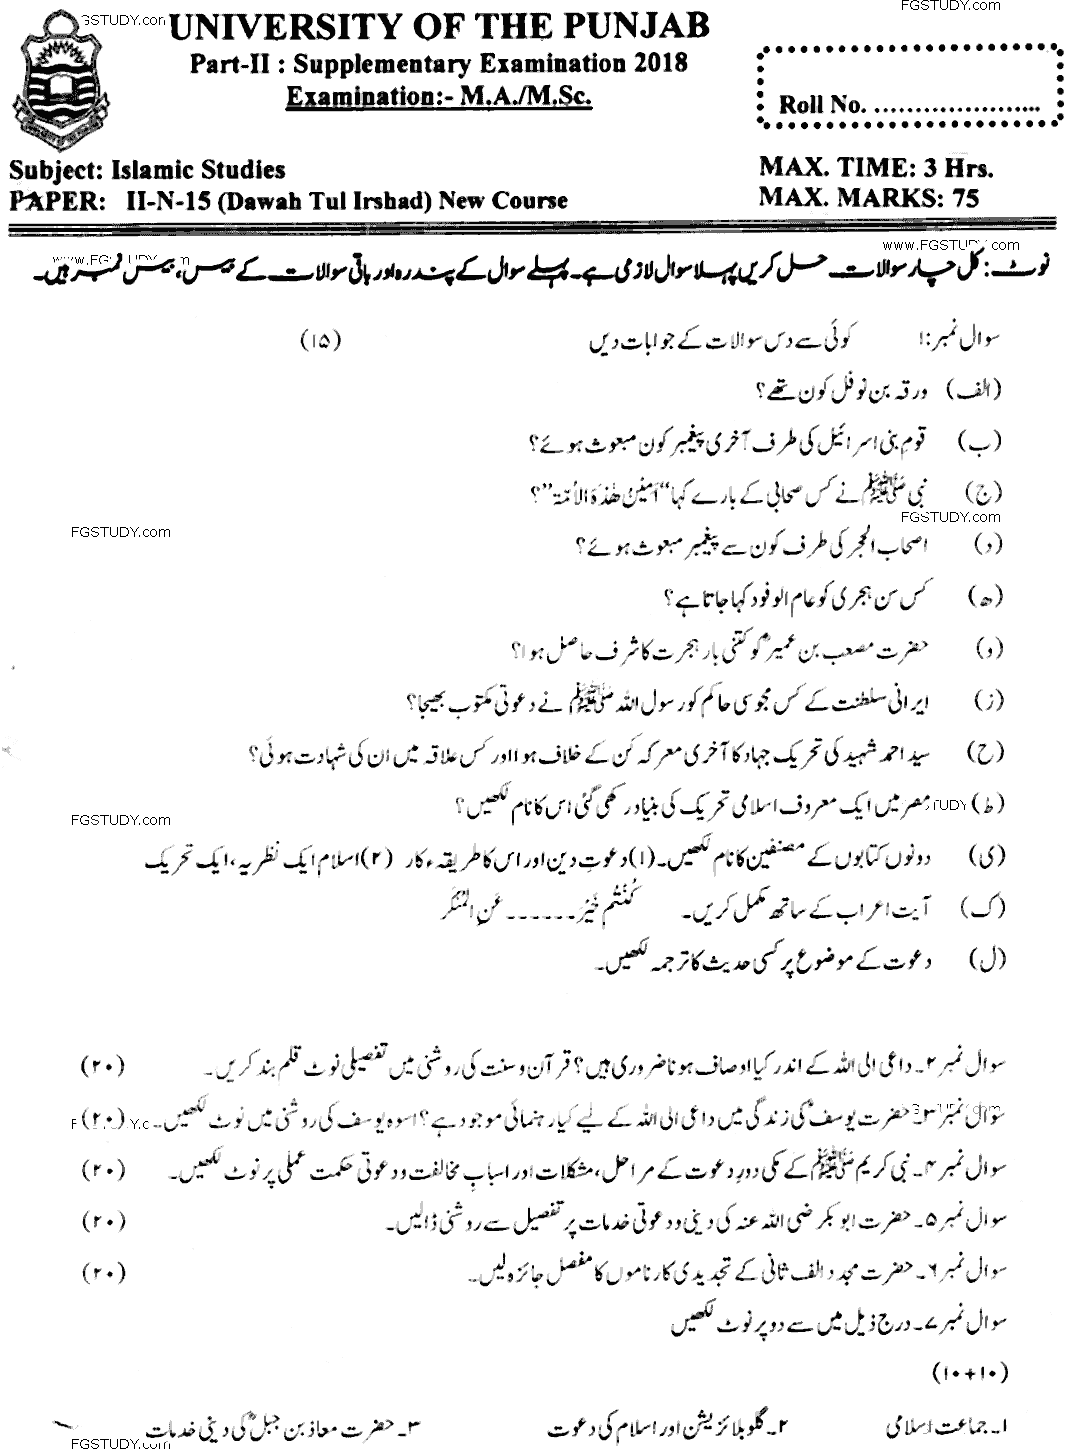 Ma Part 2 Islamic Studies Dawah Tul Irshad Past Paper 2018 Punjab University